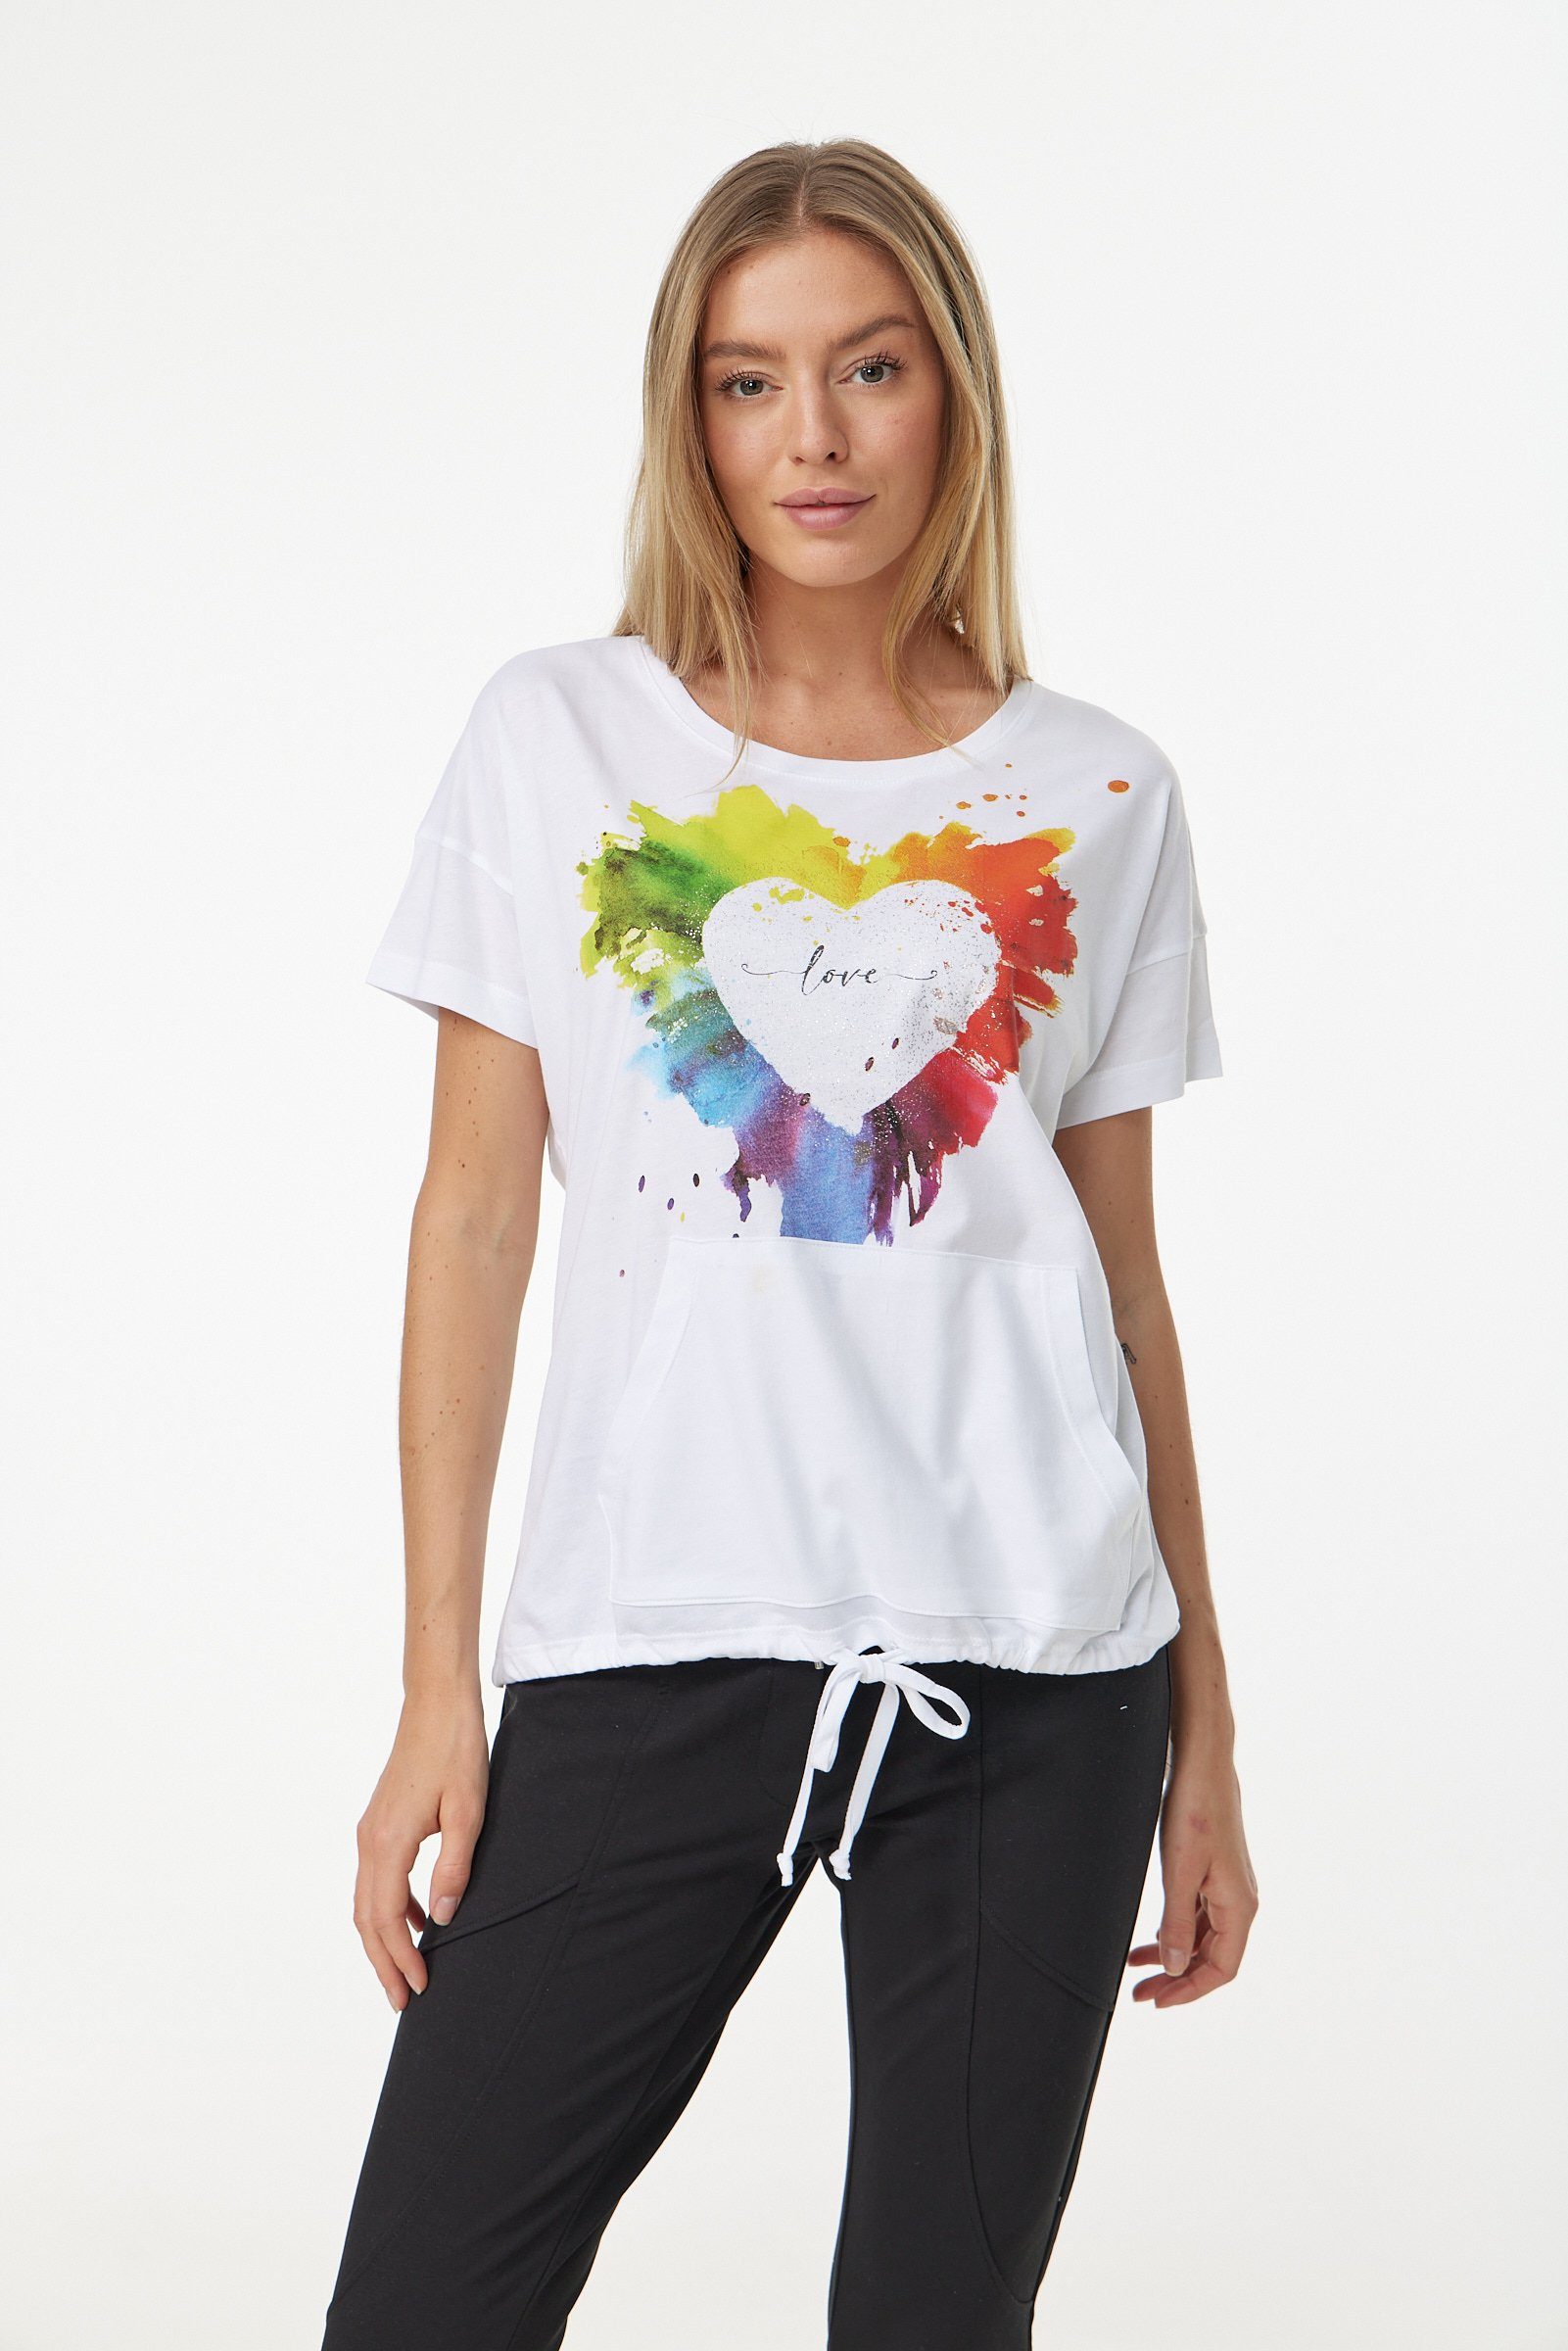 Decay T-Shirt Frontprint farbenfrohem mit